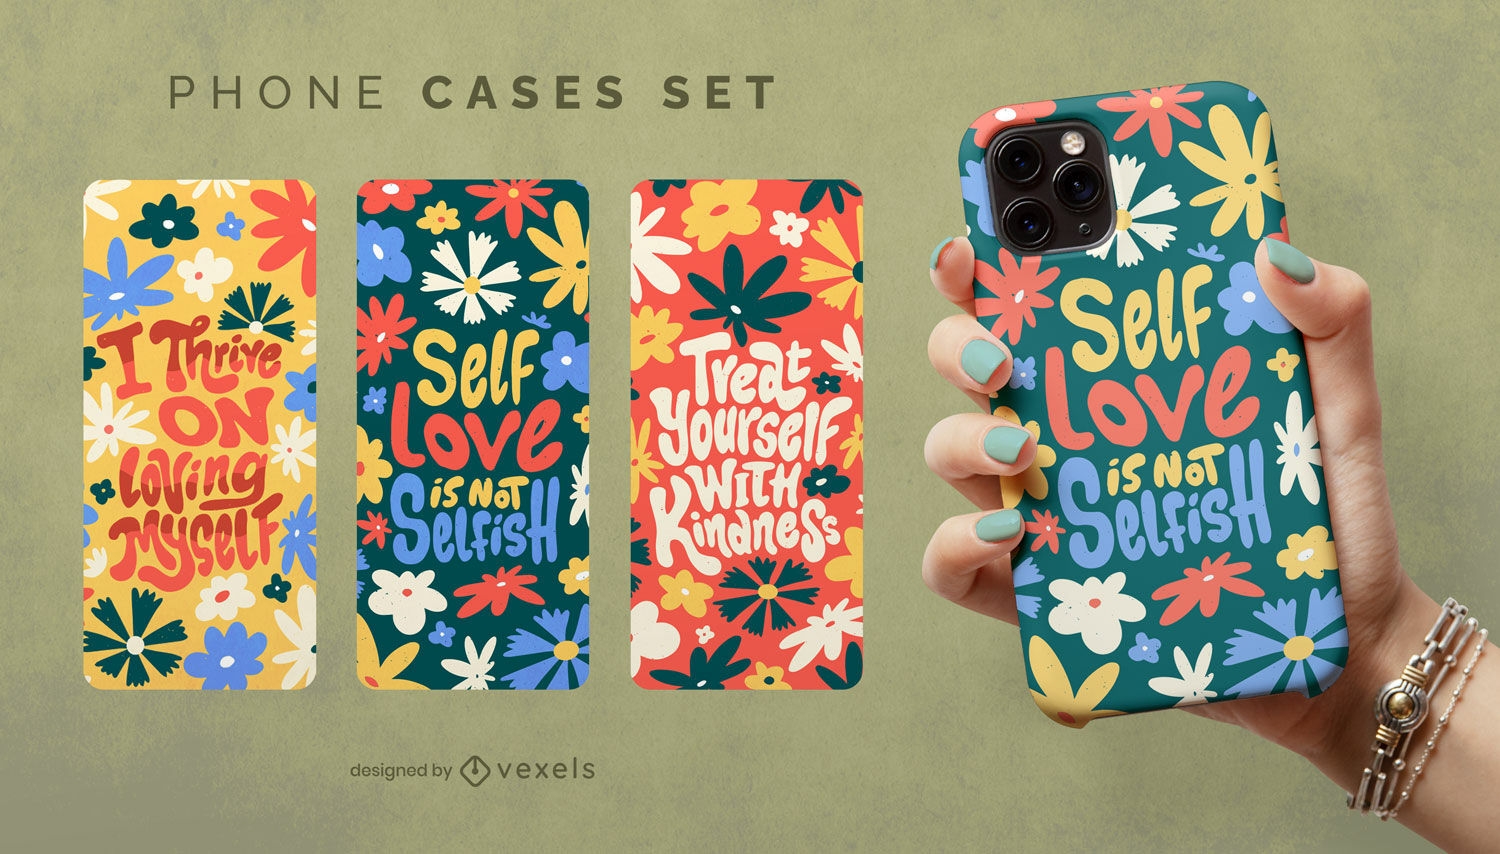 Self love phone cases set